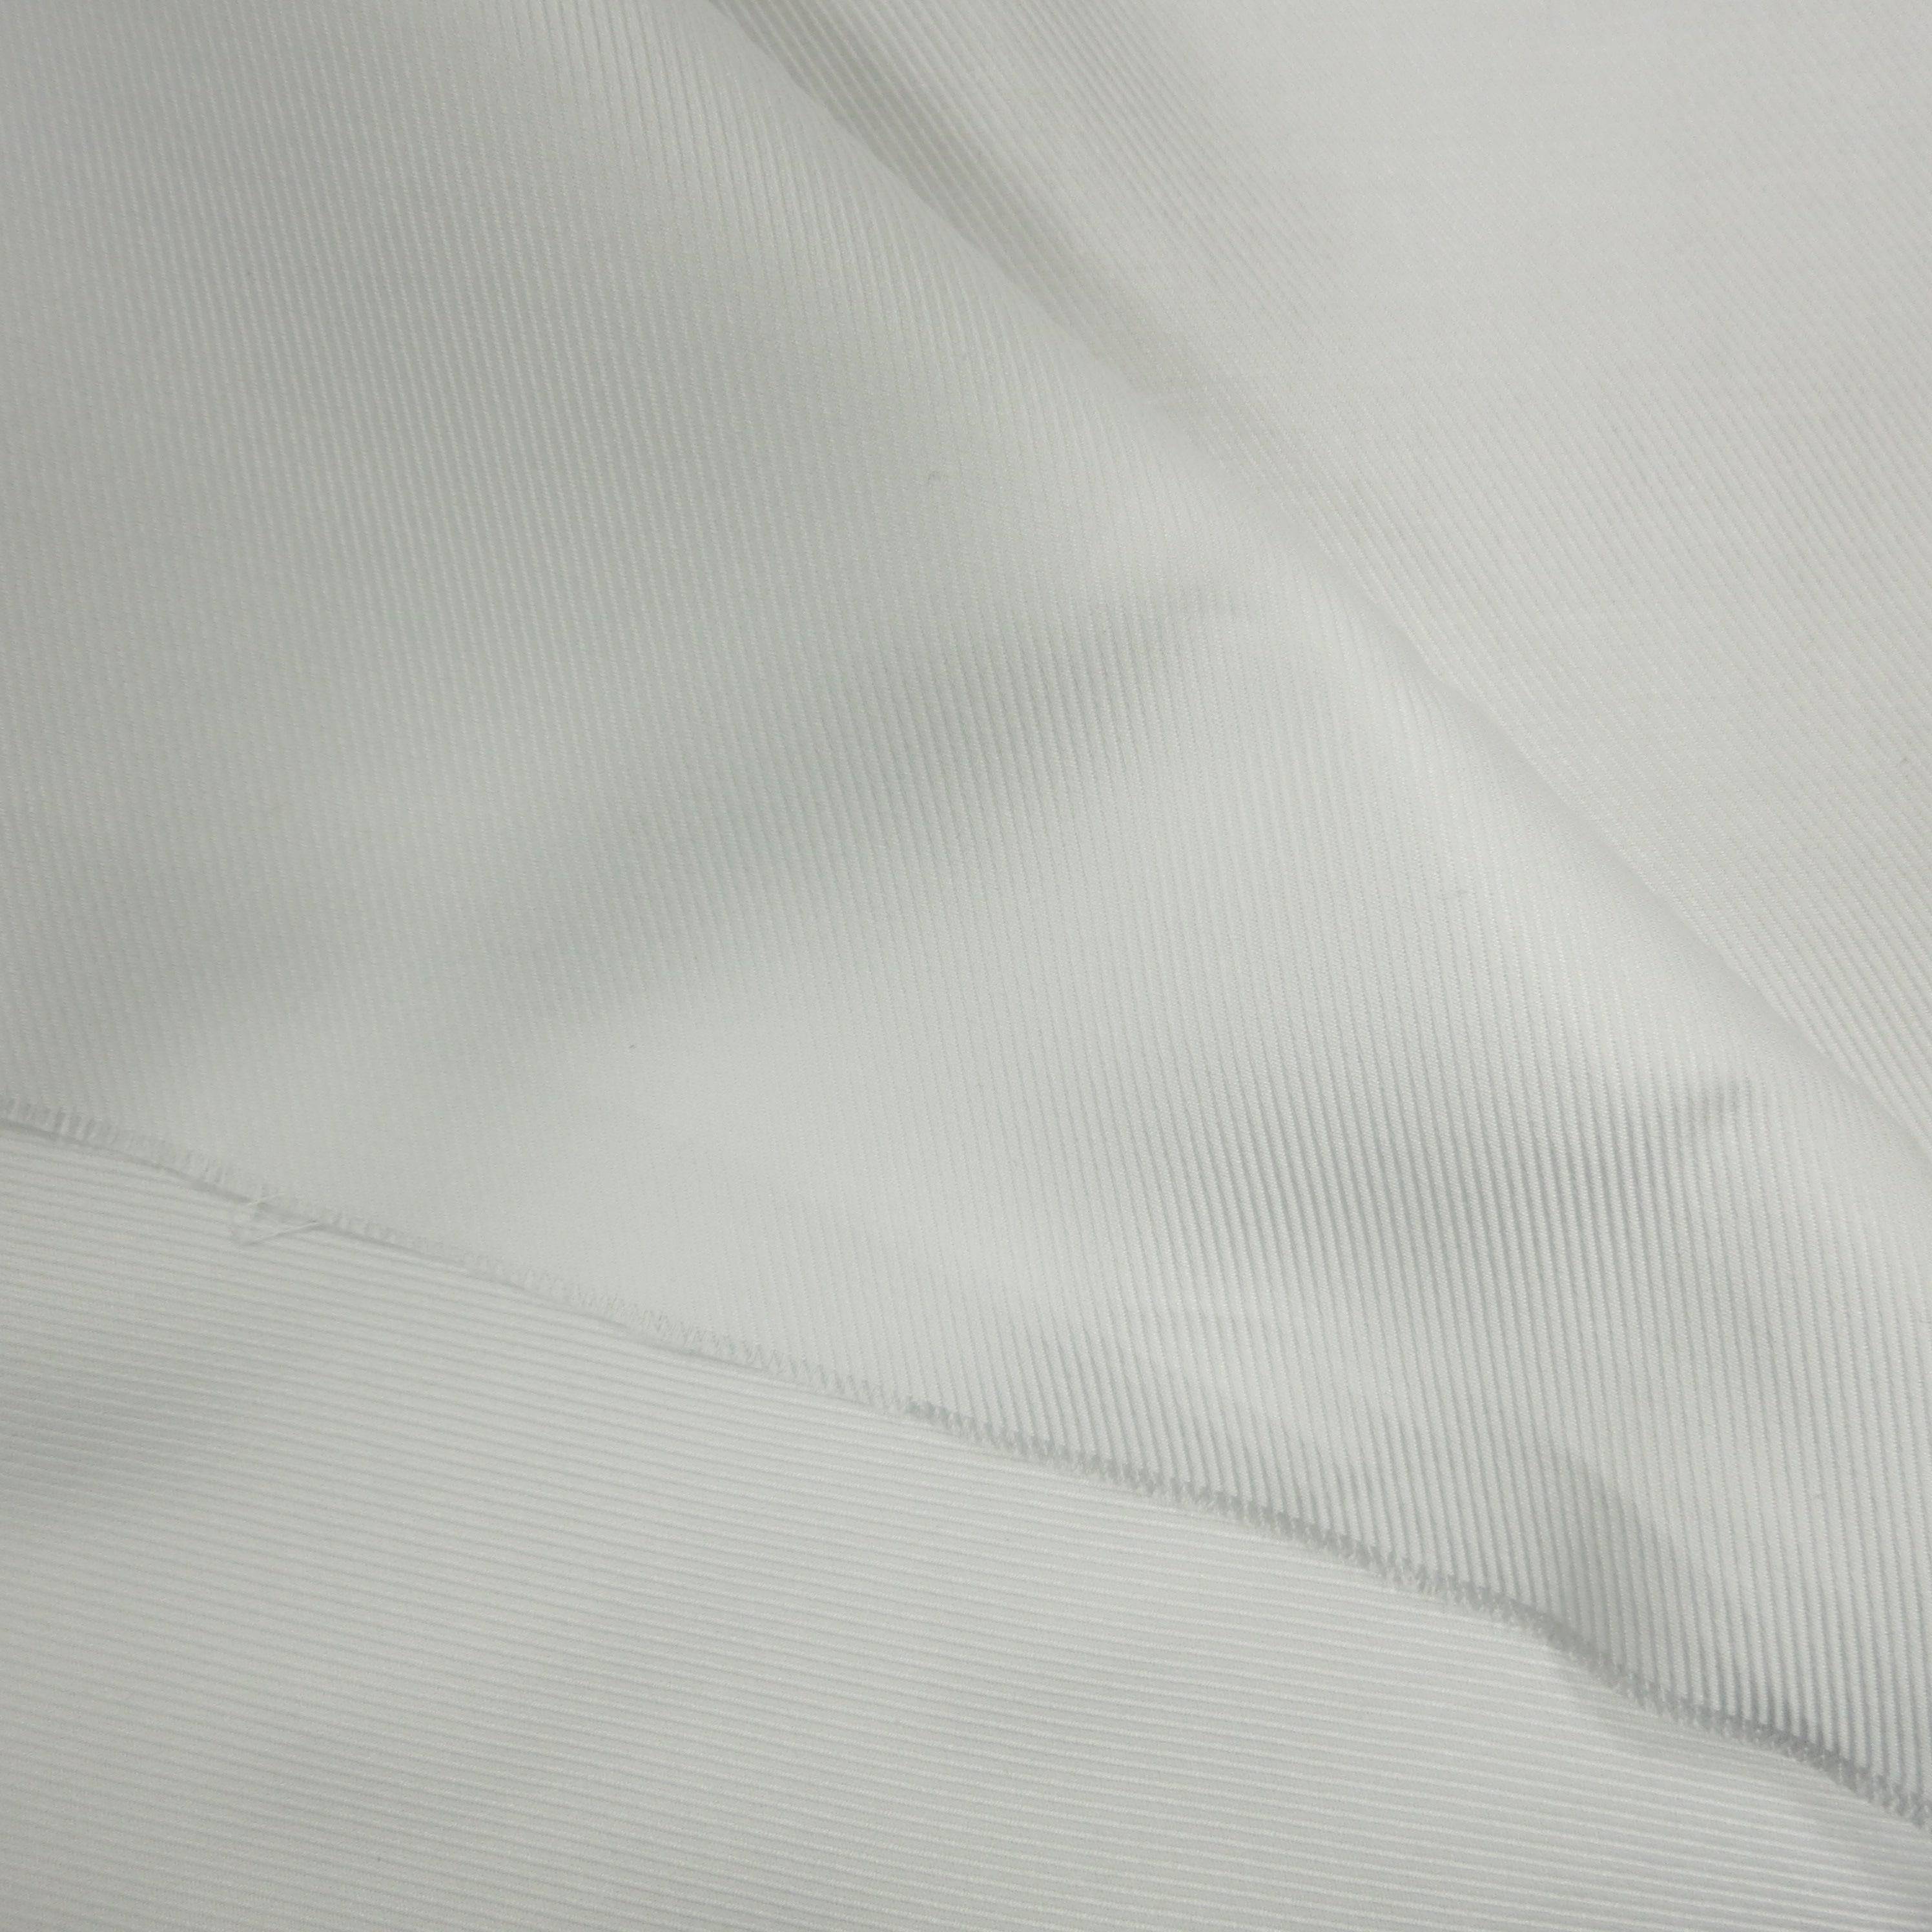 Alumo Twill Solid 100% Fine Cotton Fabric | Rex Fabrics